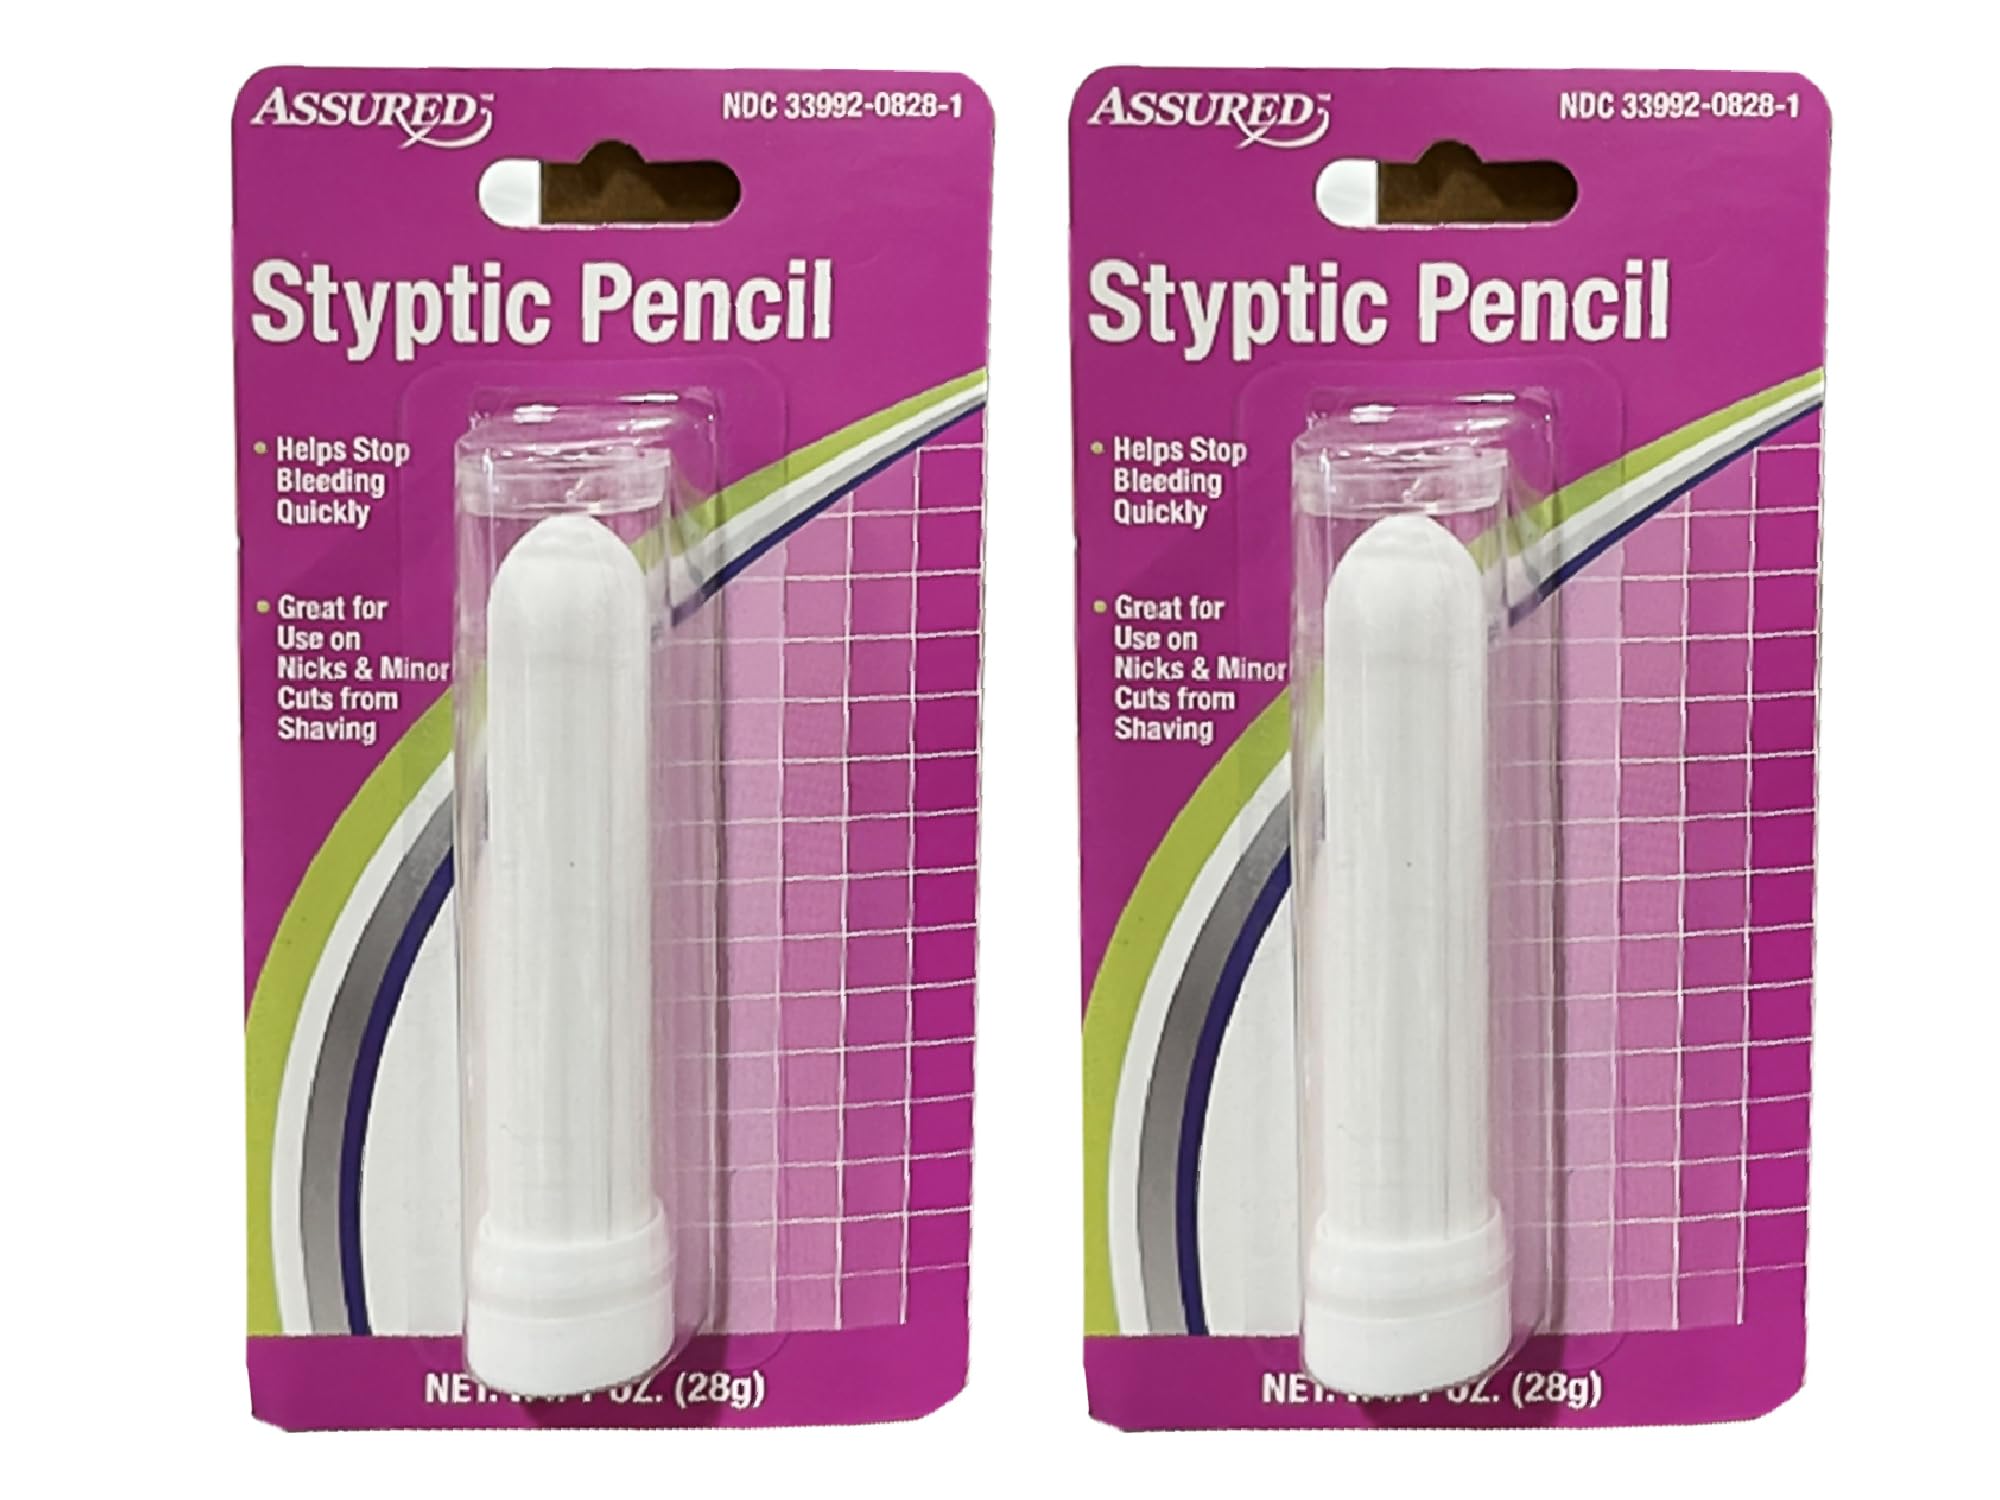 Styptic Pencils